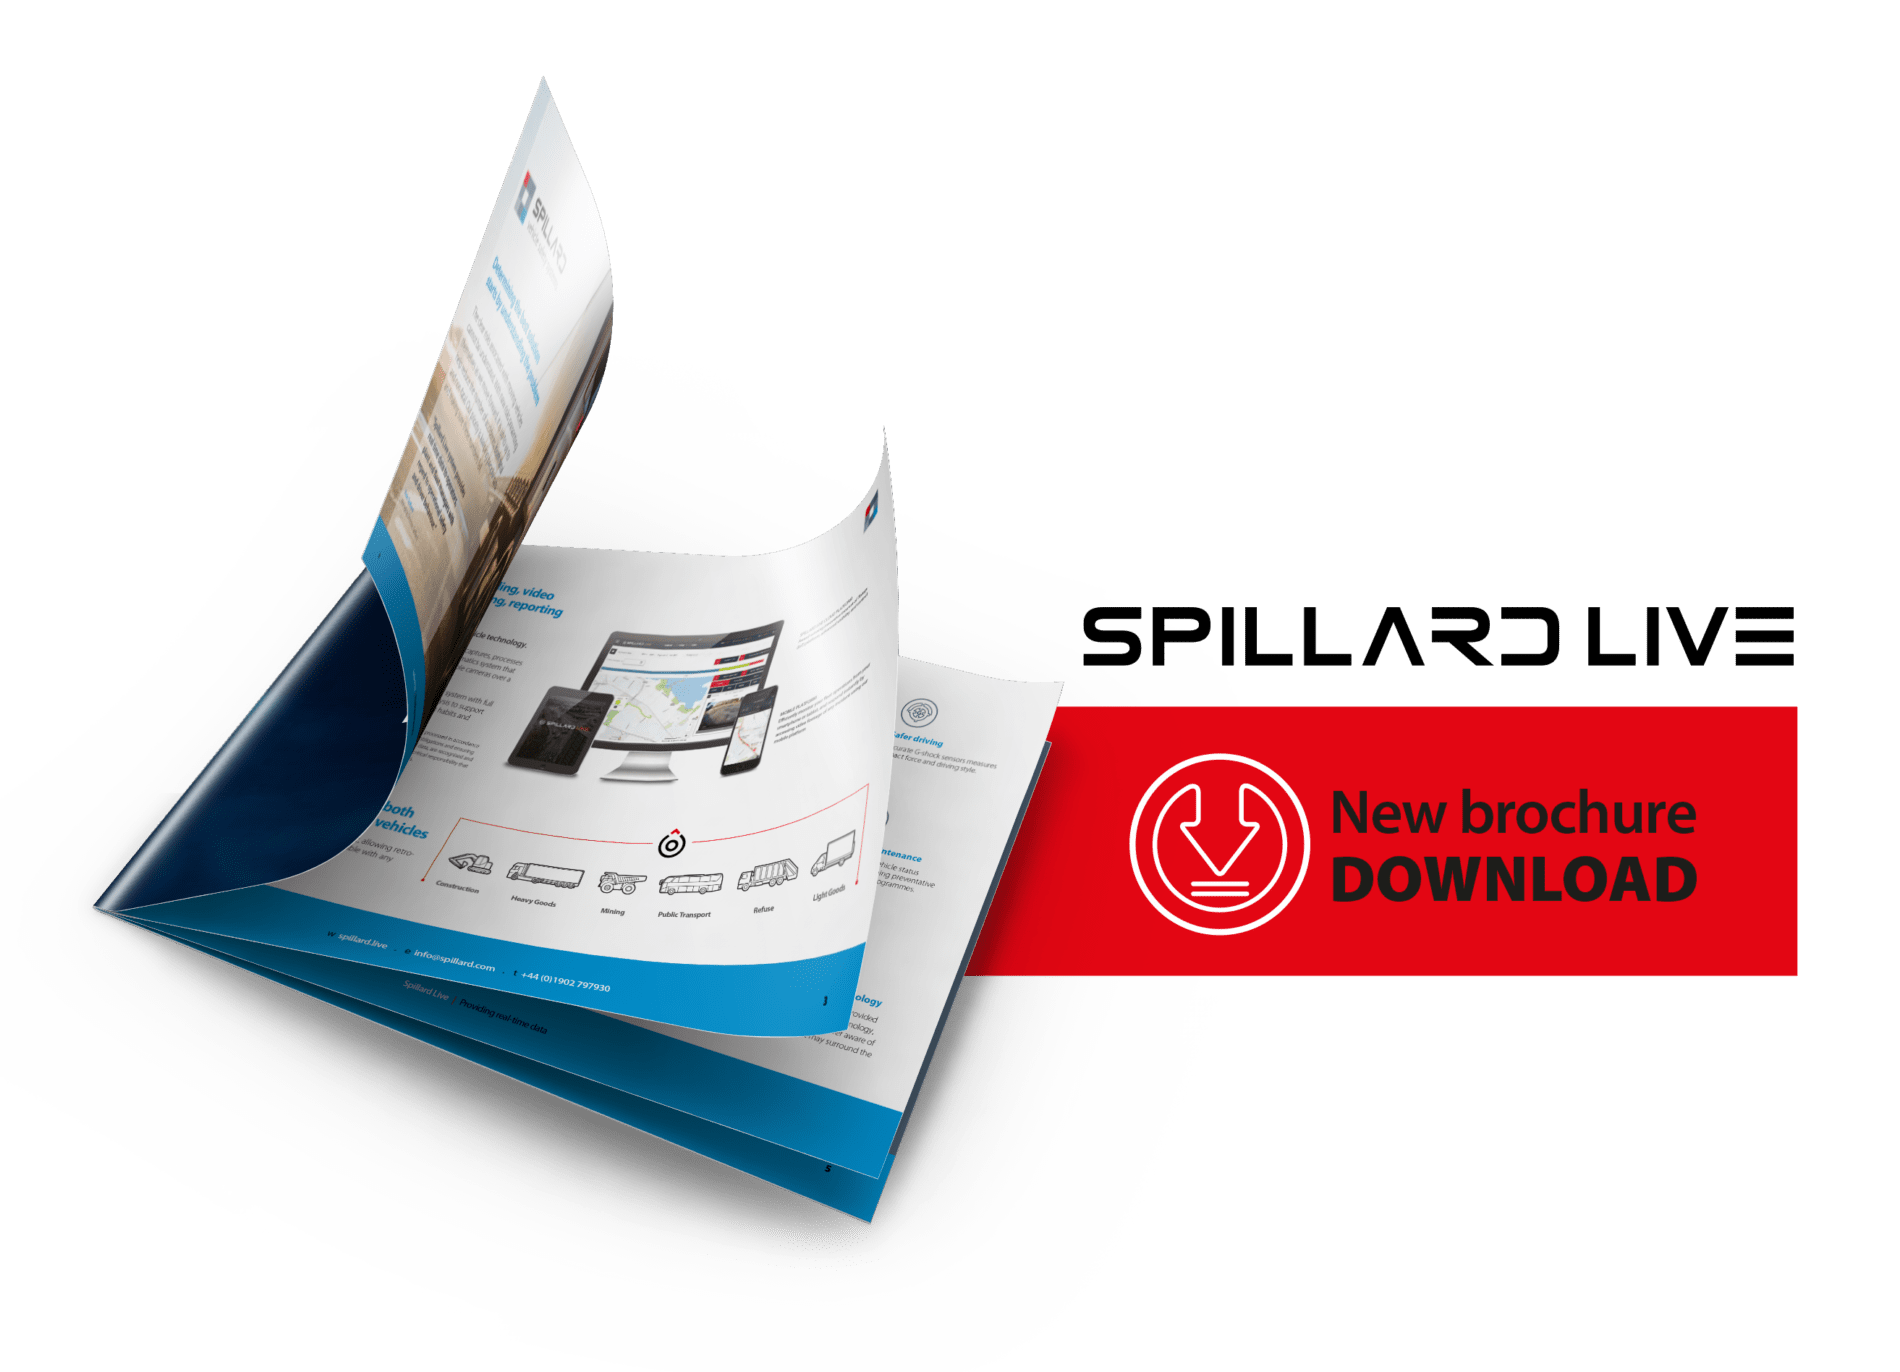 Home - A4 Spillard LIVE brochure visual